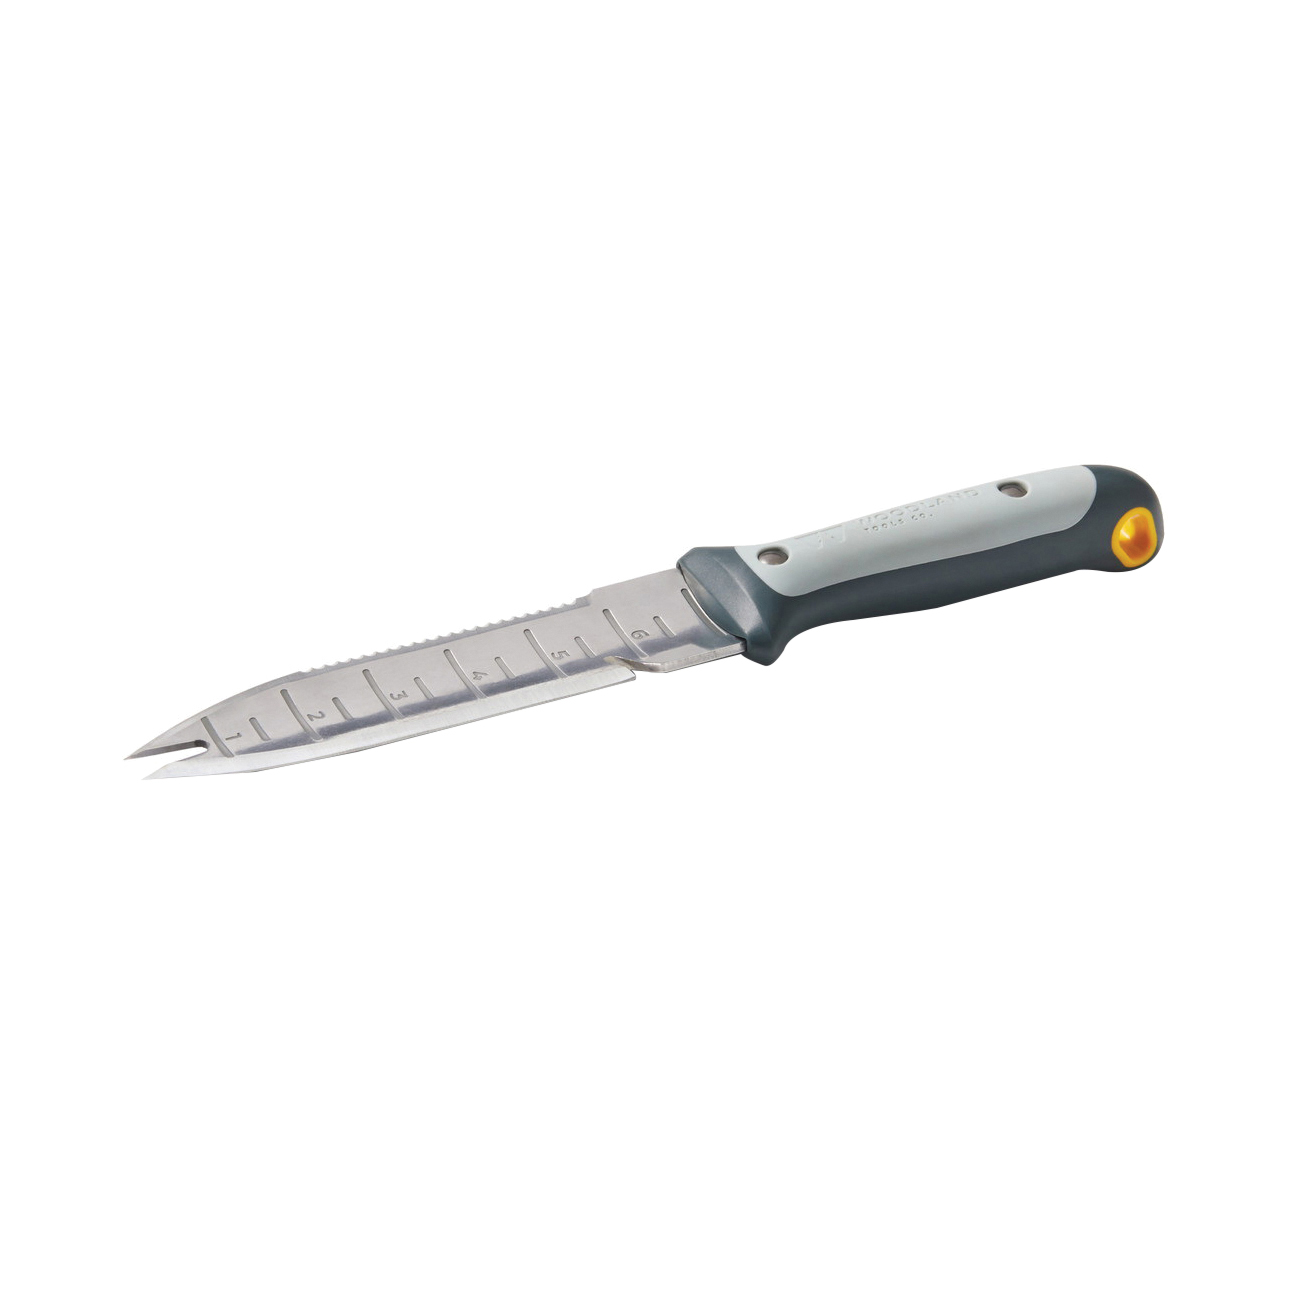 30-9010-100 Hori Hori Knife, 15 in OAL, Stainless Steel Blade, Serrated Edge Blade, Metal Handle